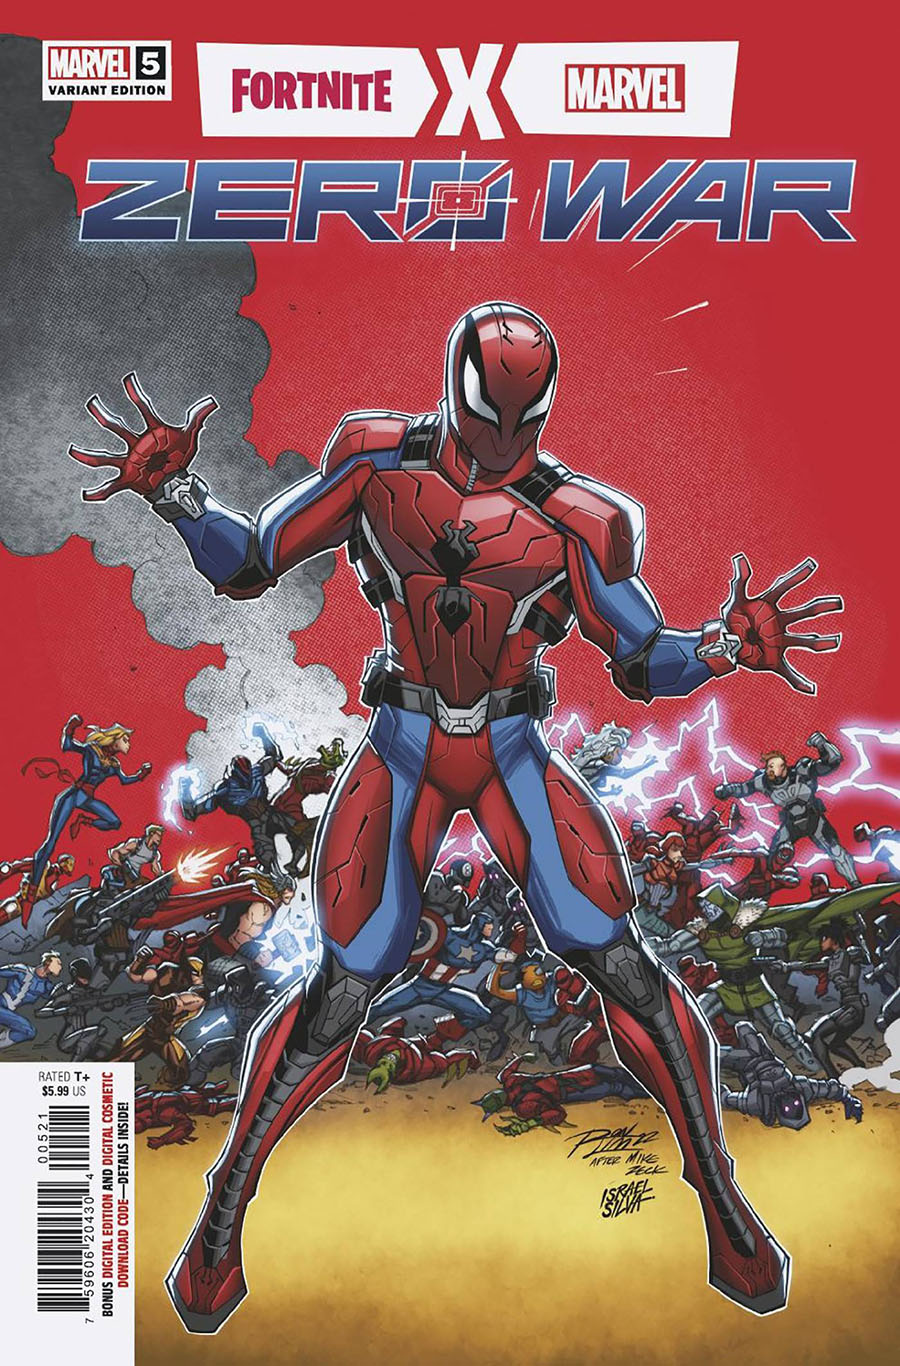 Fortnite x Marvel Zero War #5 Cover B Variant Ron Lim Cover (Limit 1 Per Customer)